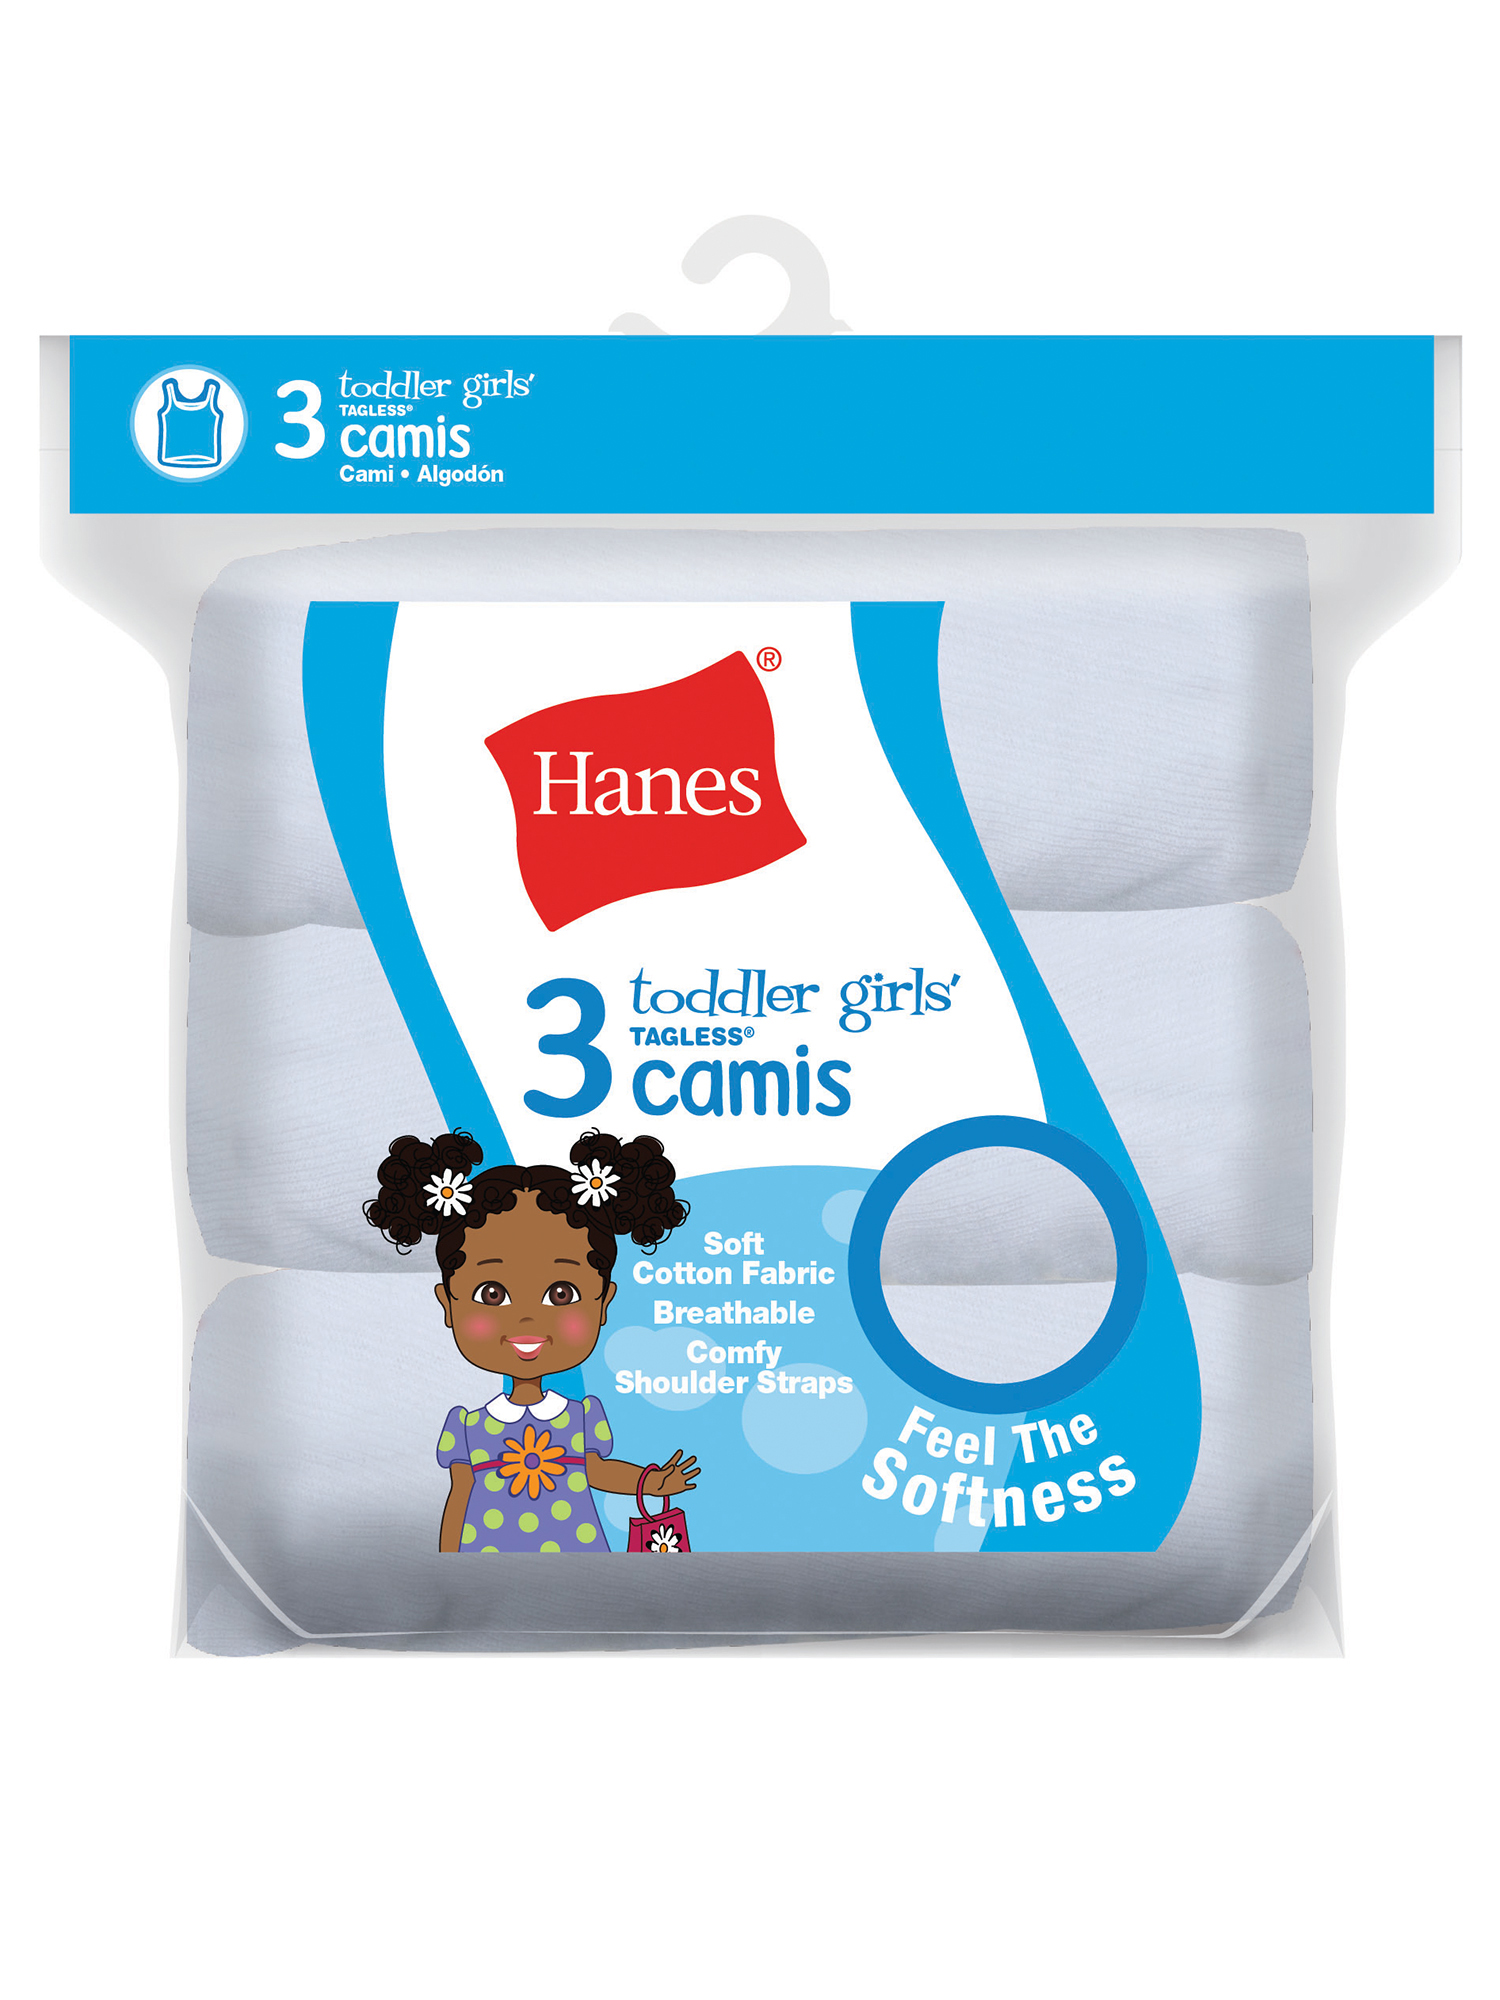 Hanes Toddler Girls Cami Tank Undershirts, 3-Pack - image 2 of 2